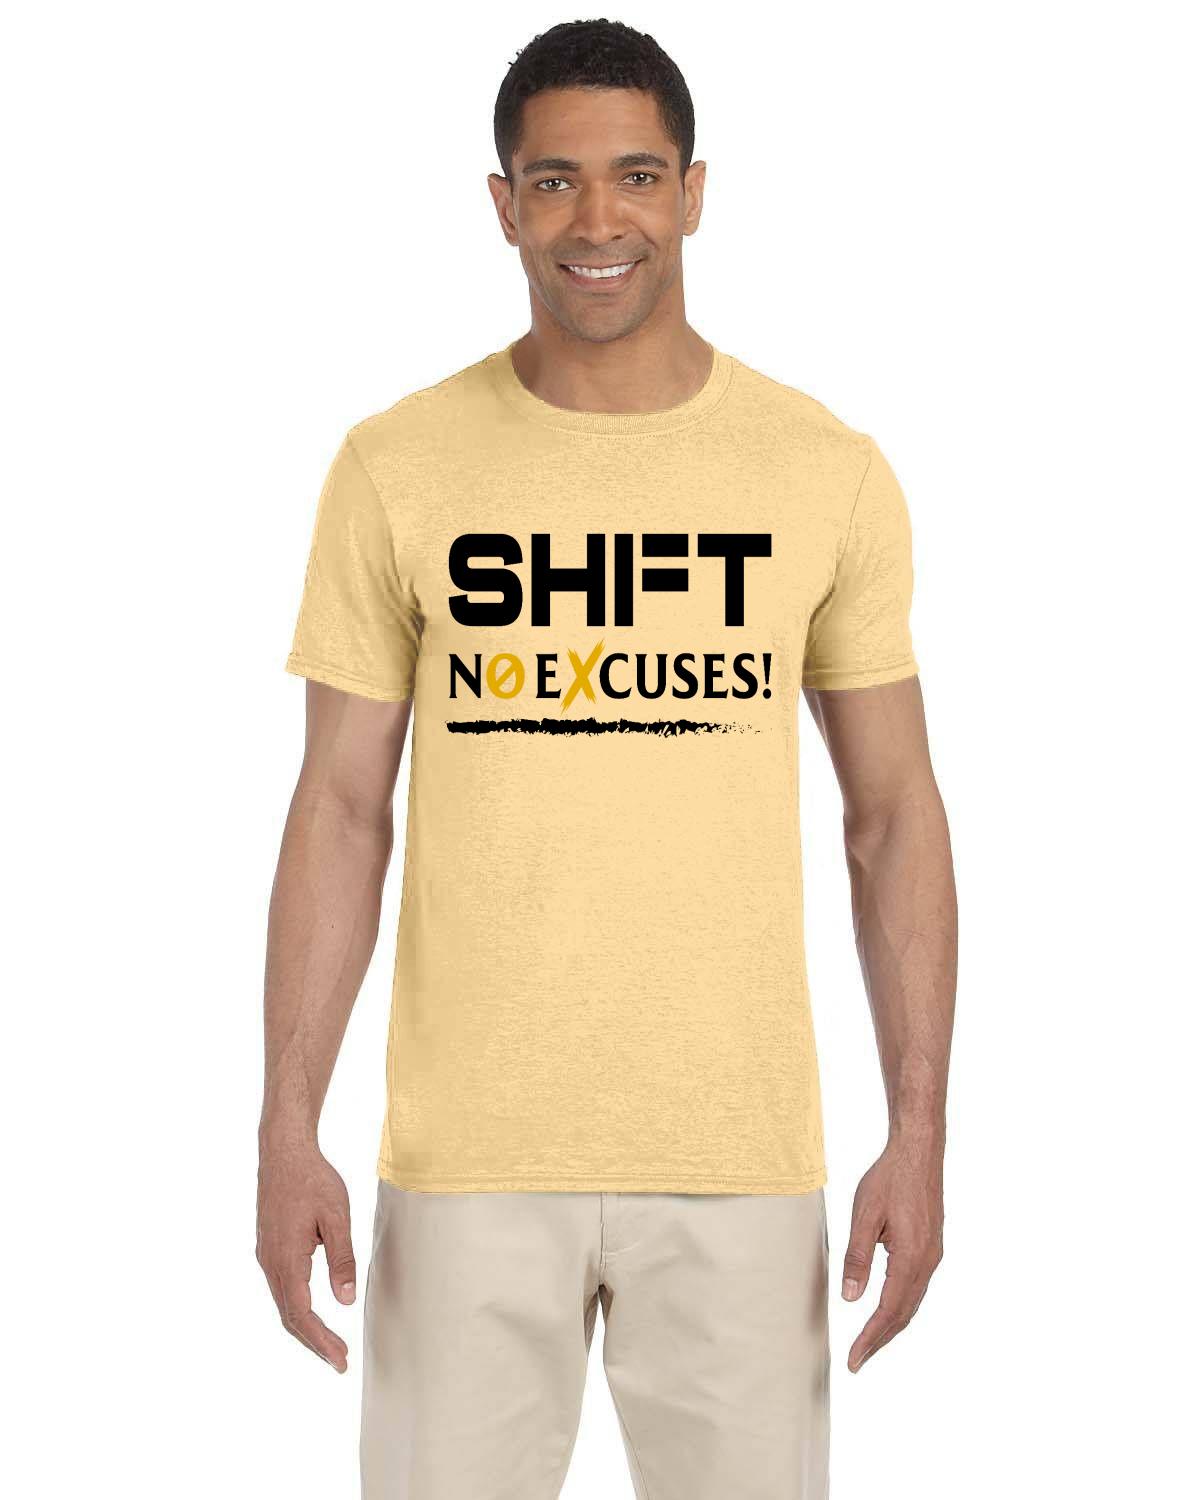 Shift No Excuse Softstyle T-Shirt